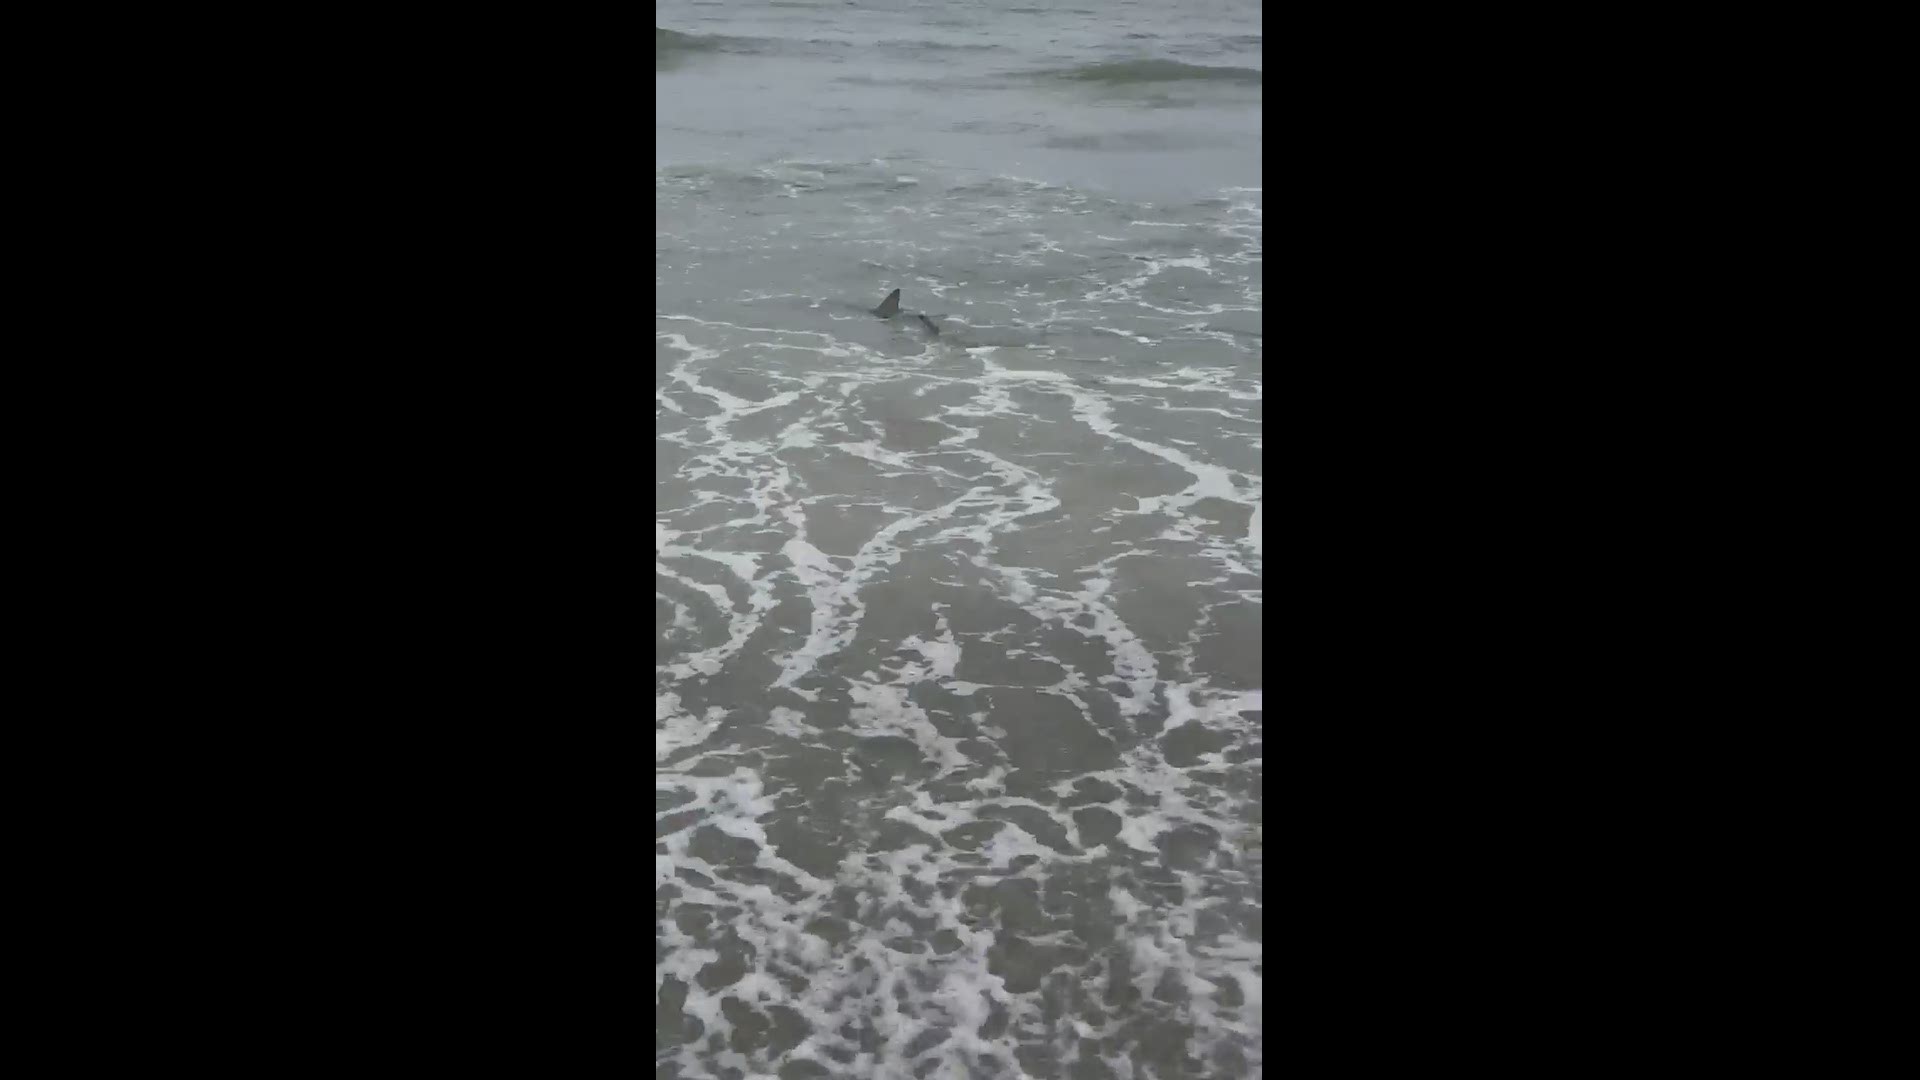 Shark spotted swimming near beachgoers in Myrtle Beach